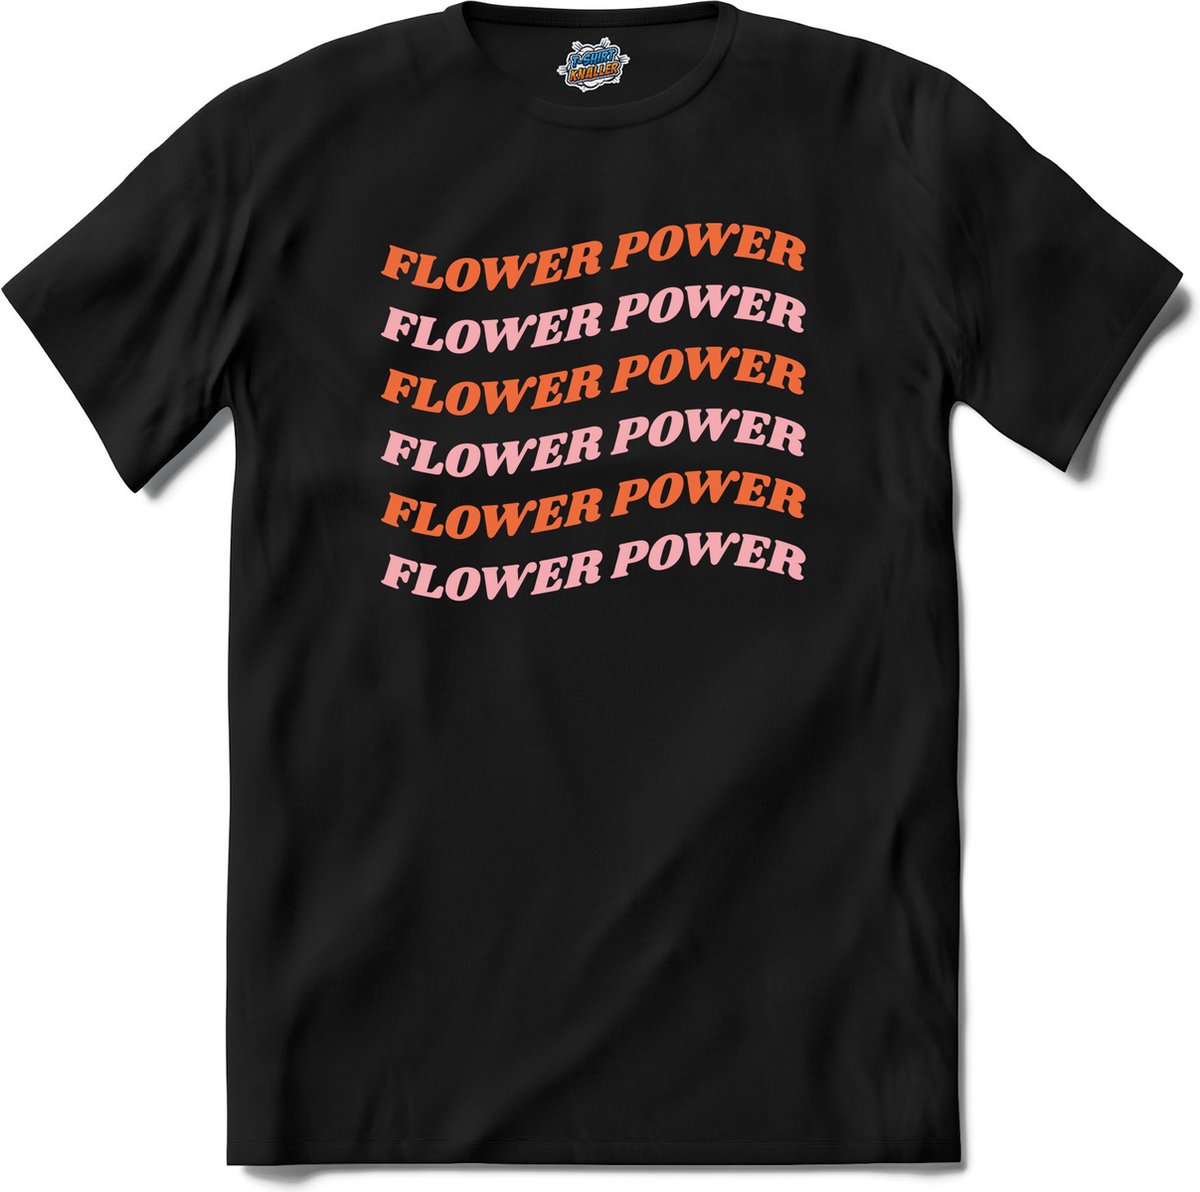 Flower power - T-Shirt - Meisjes - Zwart - Maat 6 jaar